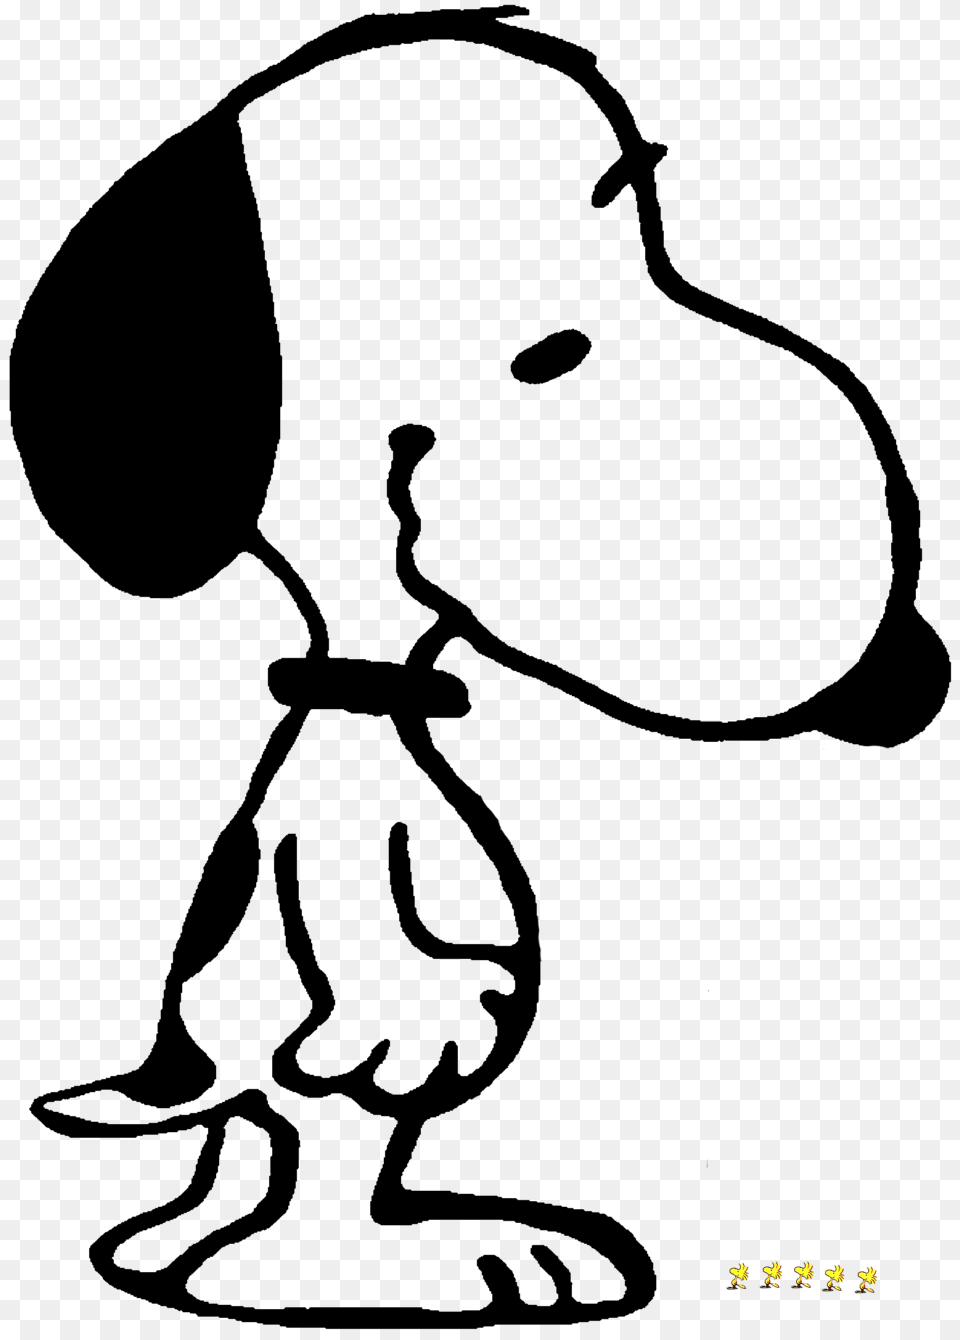 Snoopy Halloween Clip Art Artfree Woodstock Happy Wish Iphone Free Transparent Png